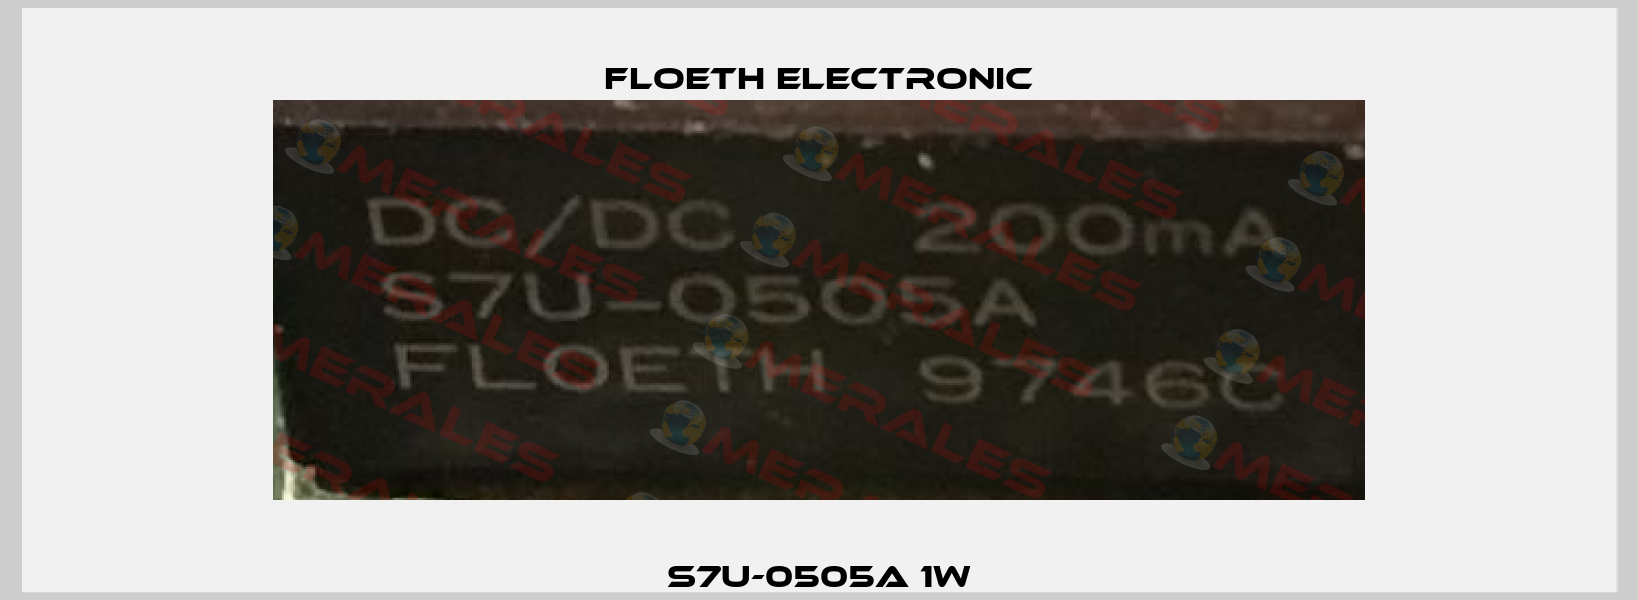 S7U-0505A 1W Floeth Electronic